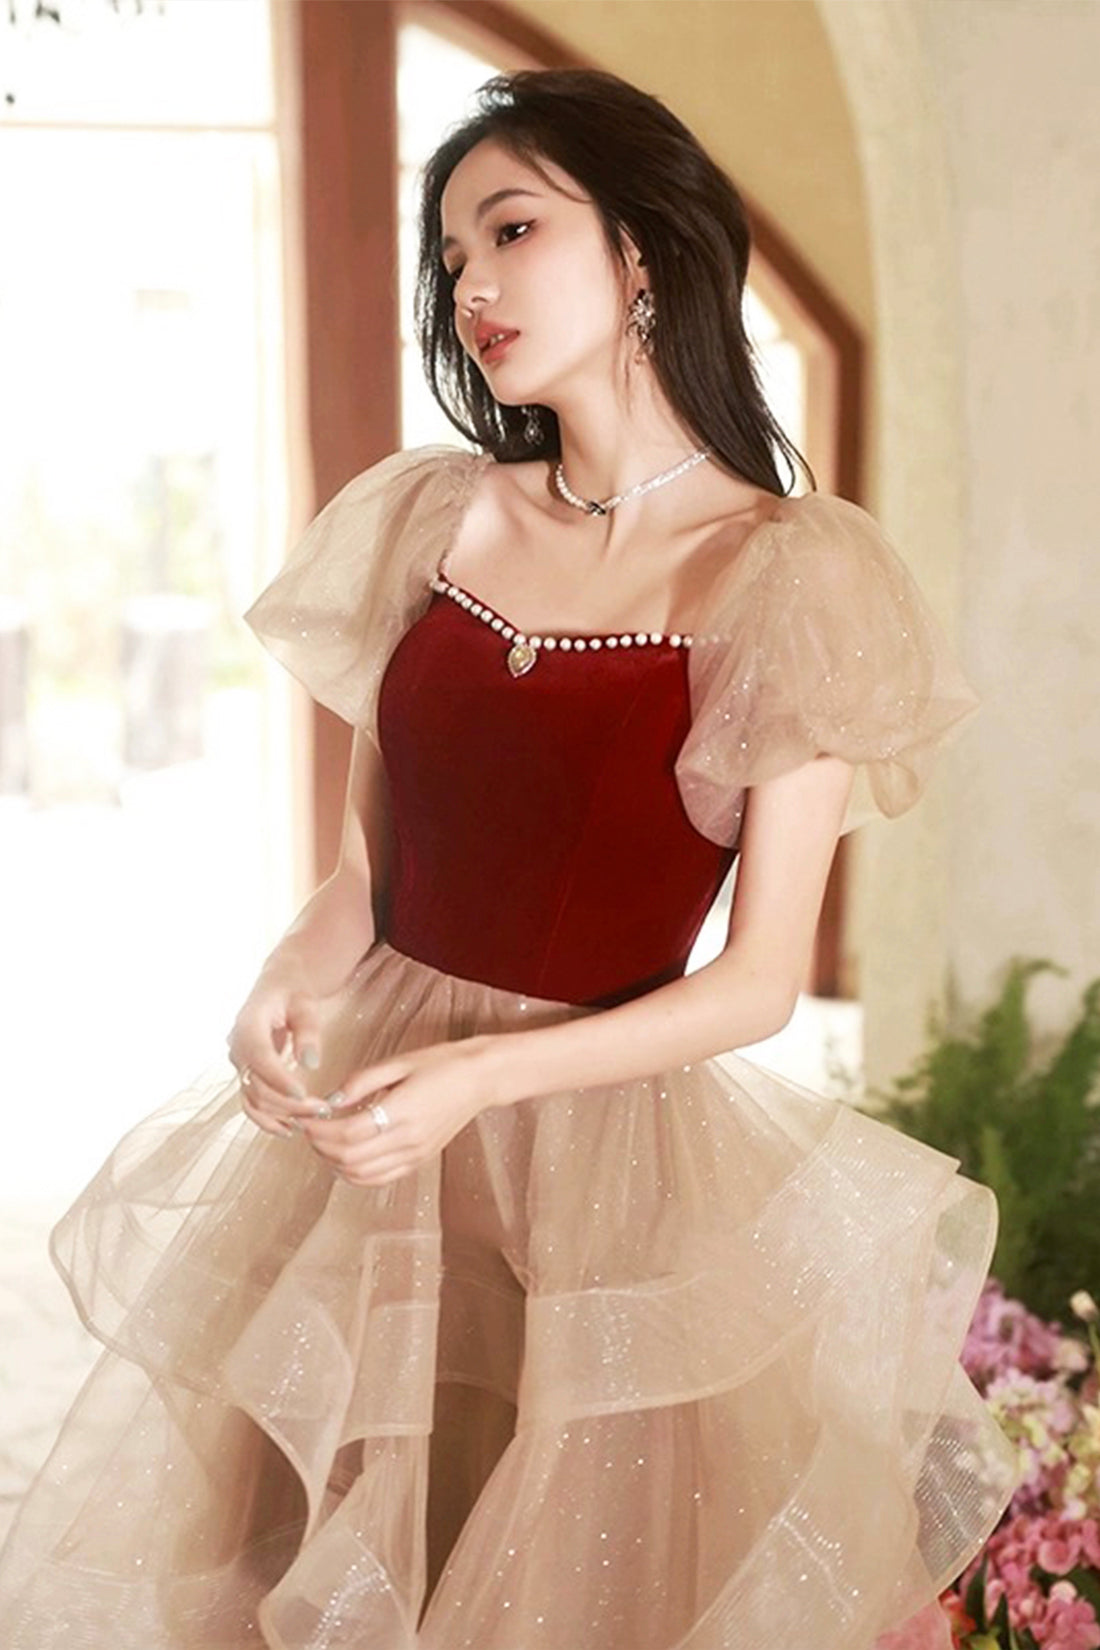 Cute Velvet Tulle Short Prom Dress, Beautiful Party Dress Homecoming Dress